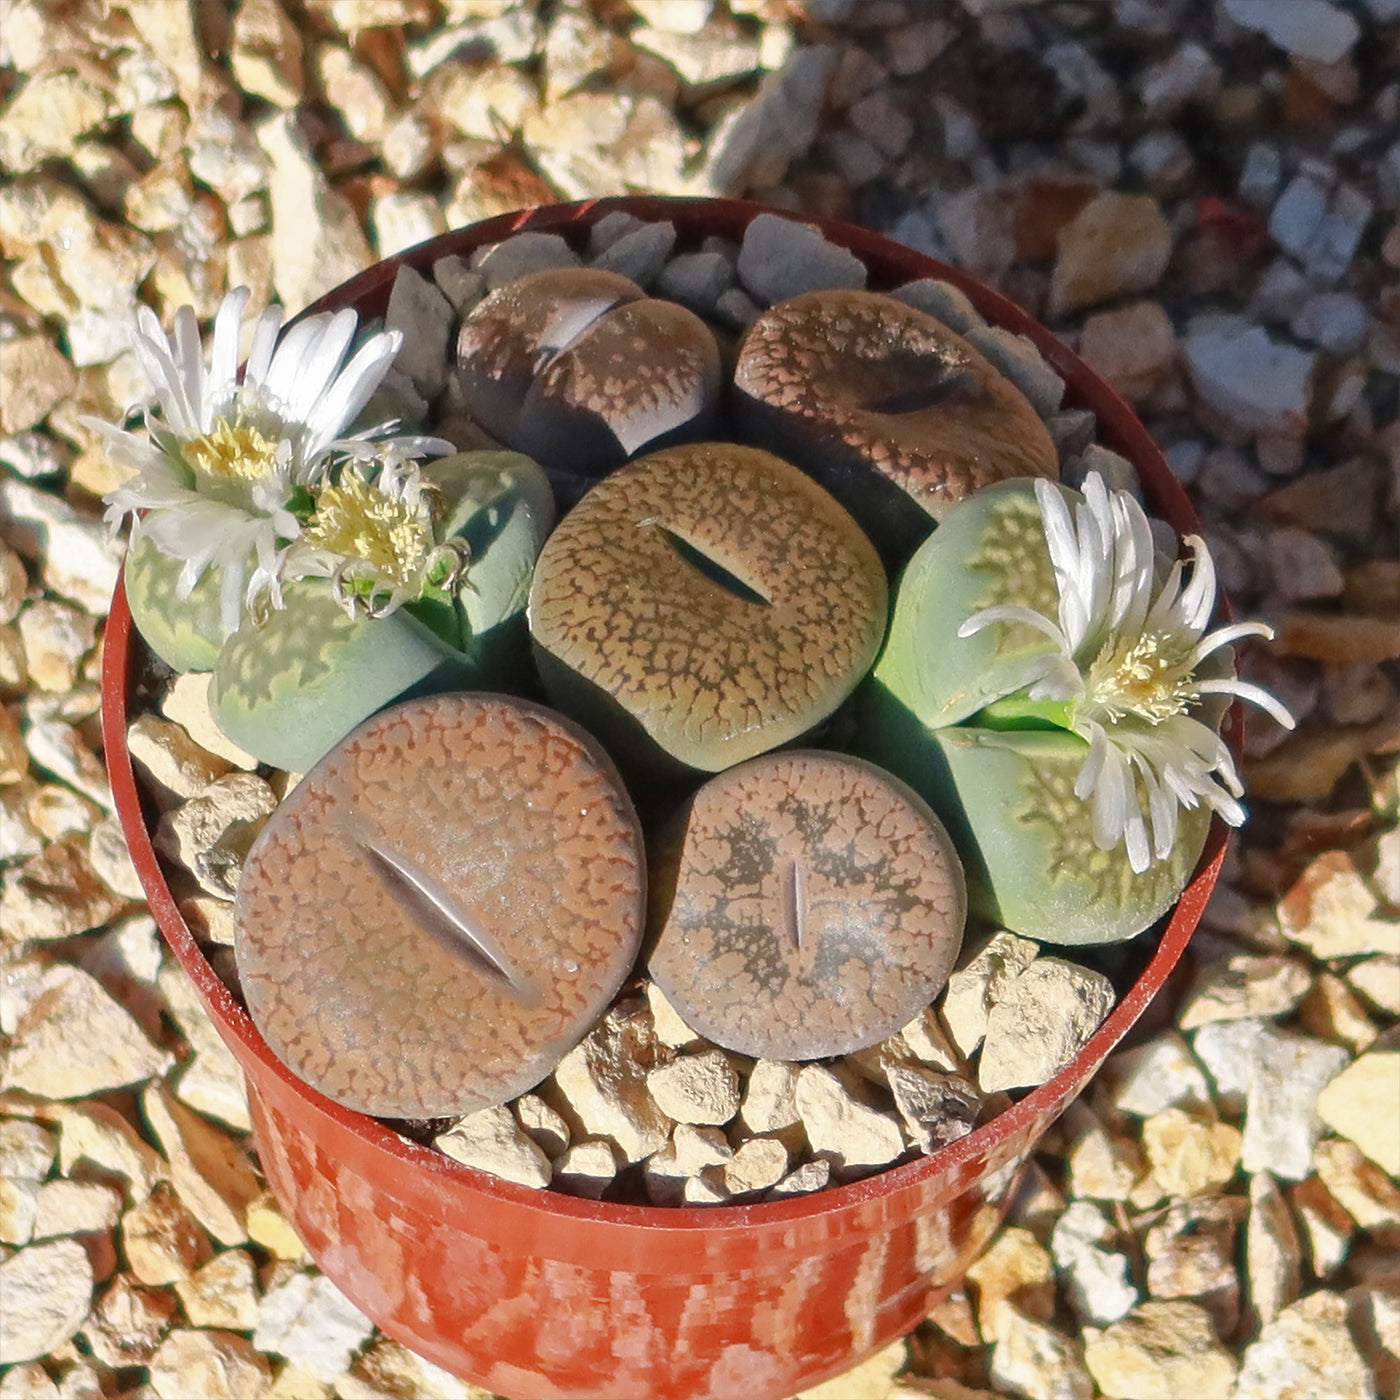 Living Stones Garden - Assortment of Lithops Plants